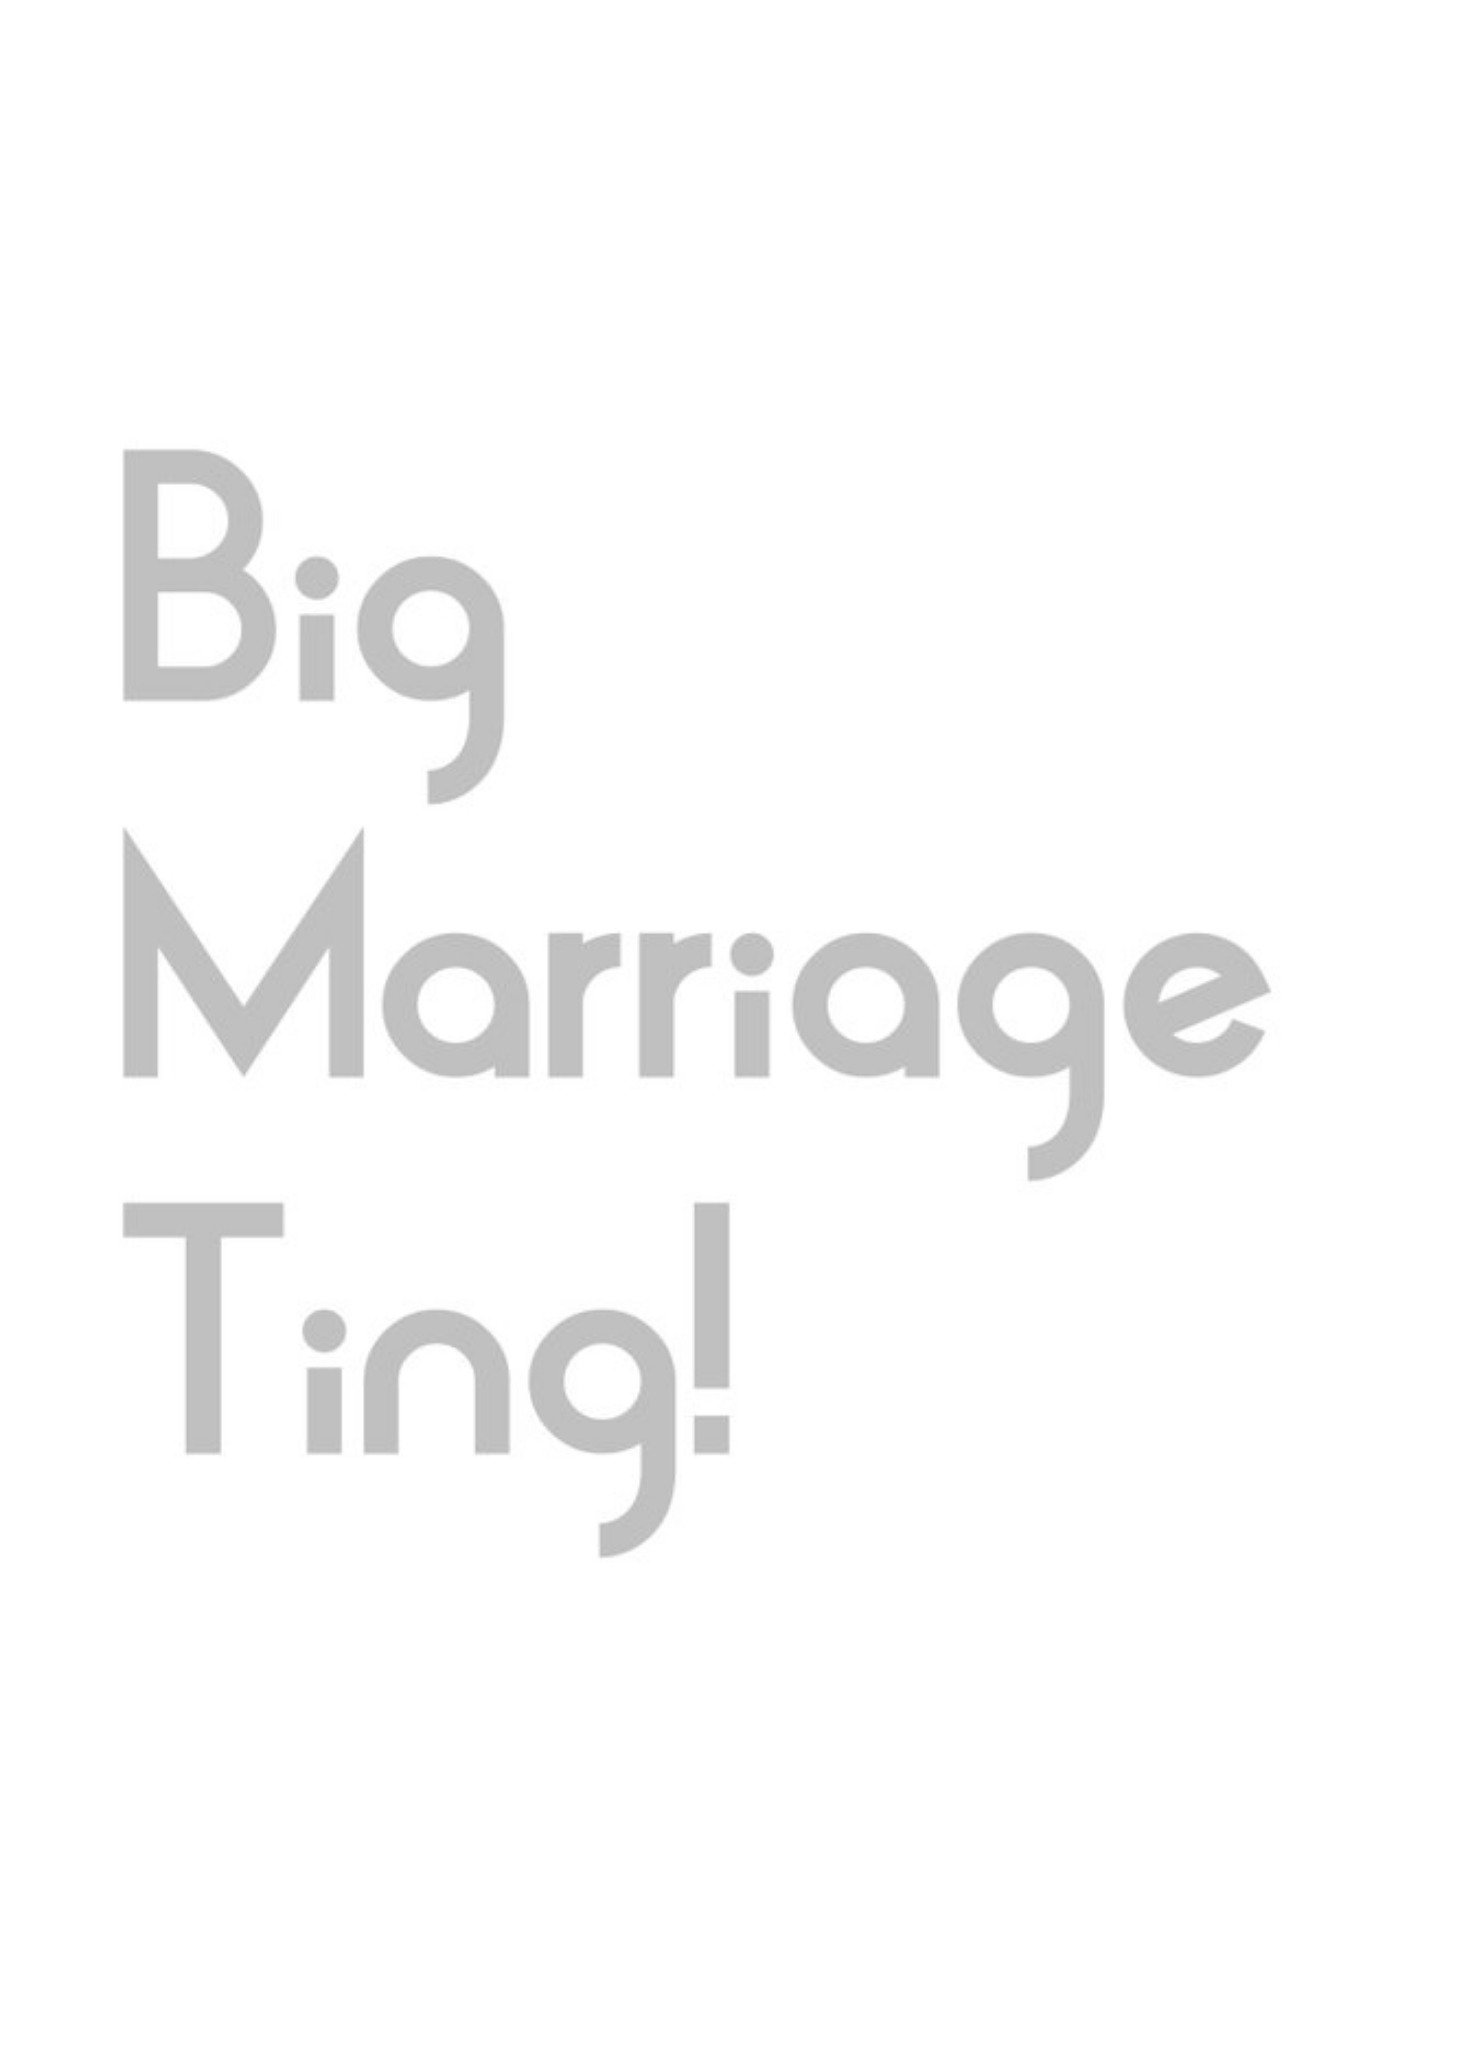 Moonpig Streetgreets Modern Typographic Wedding Card Ecard